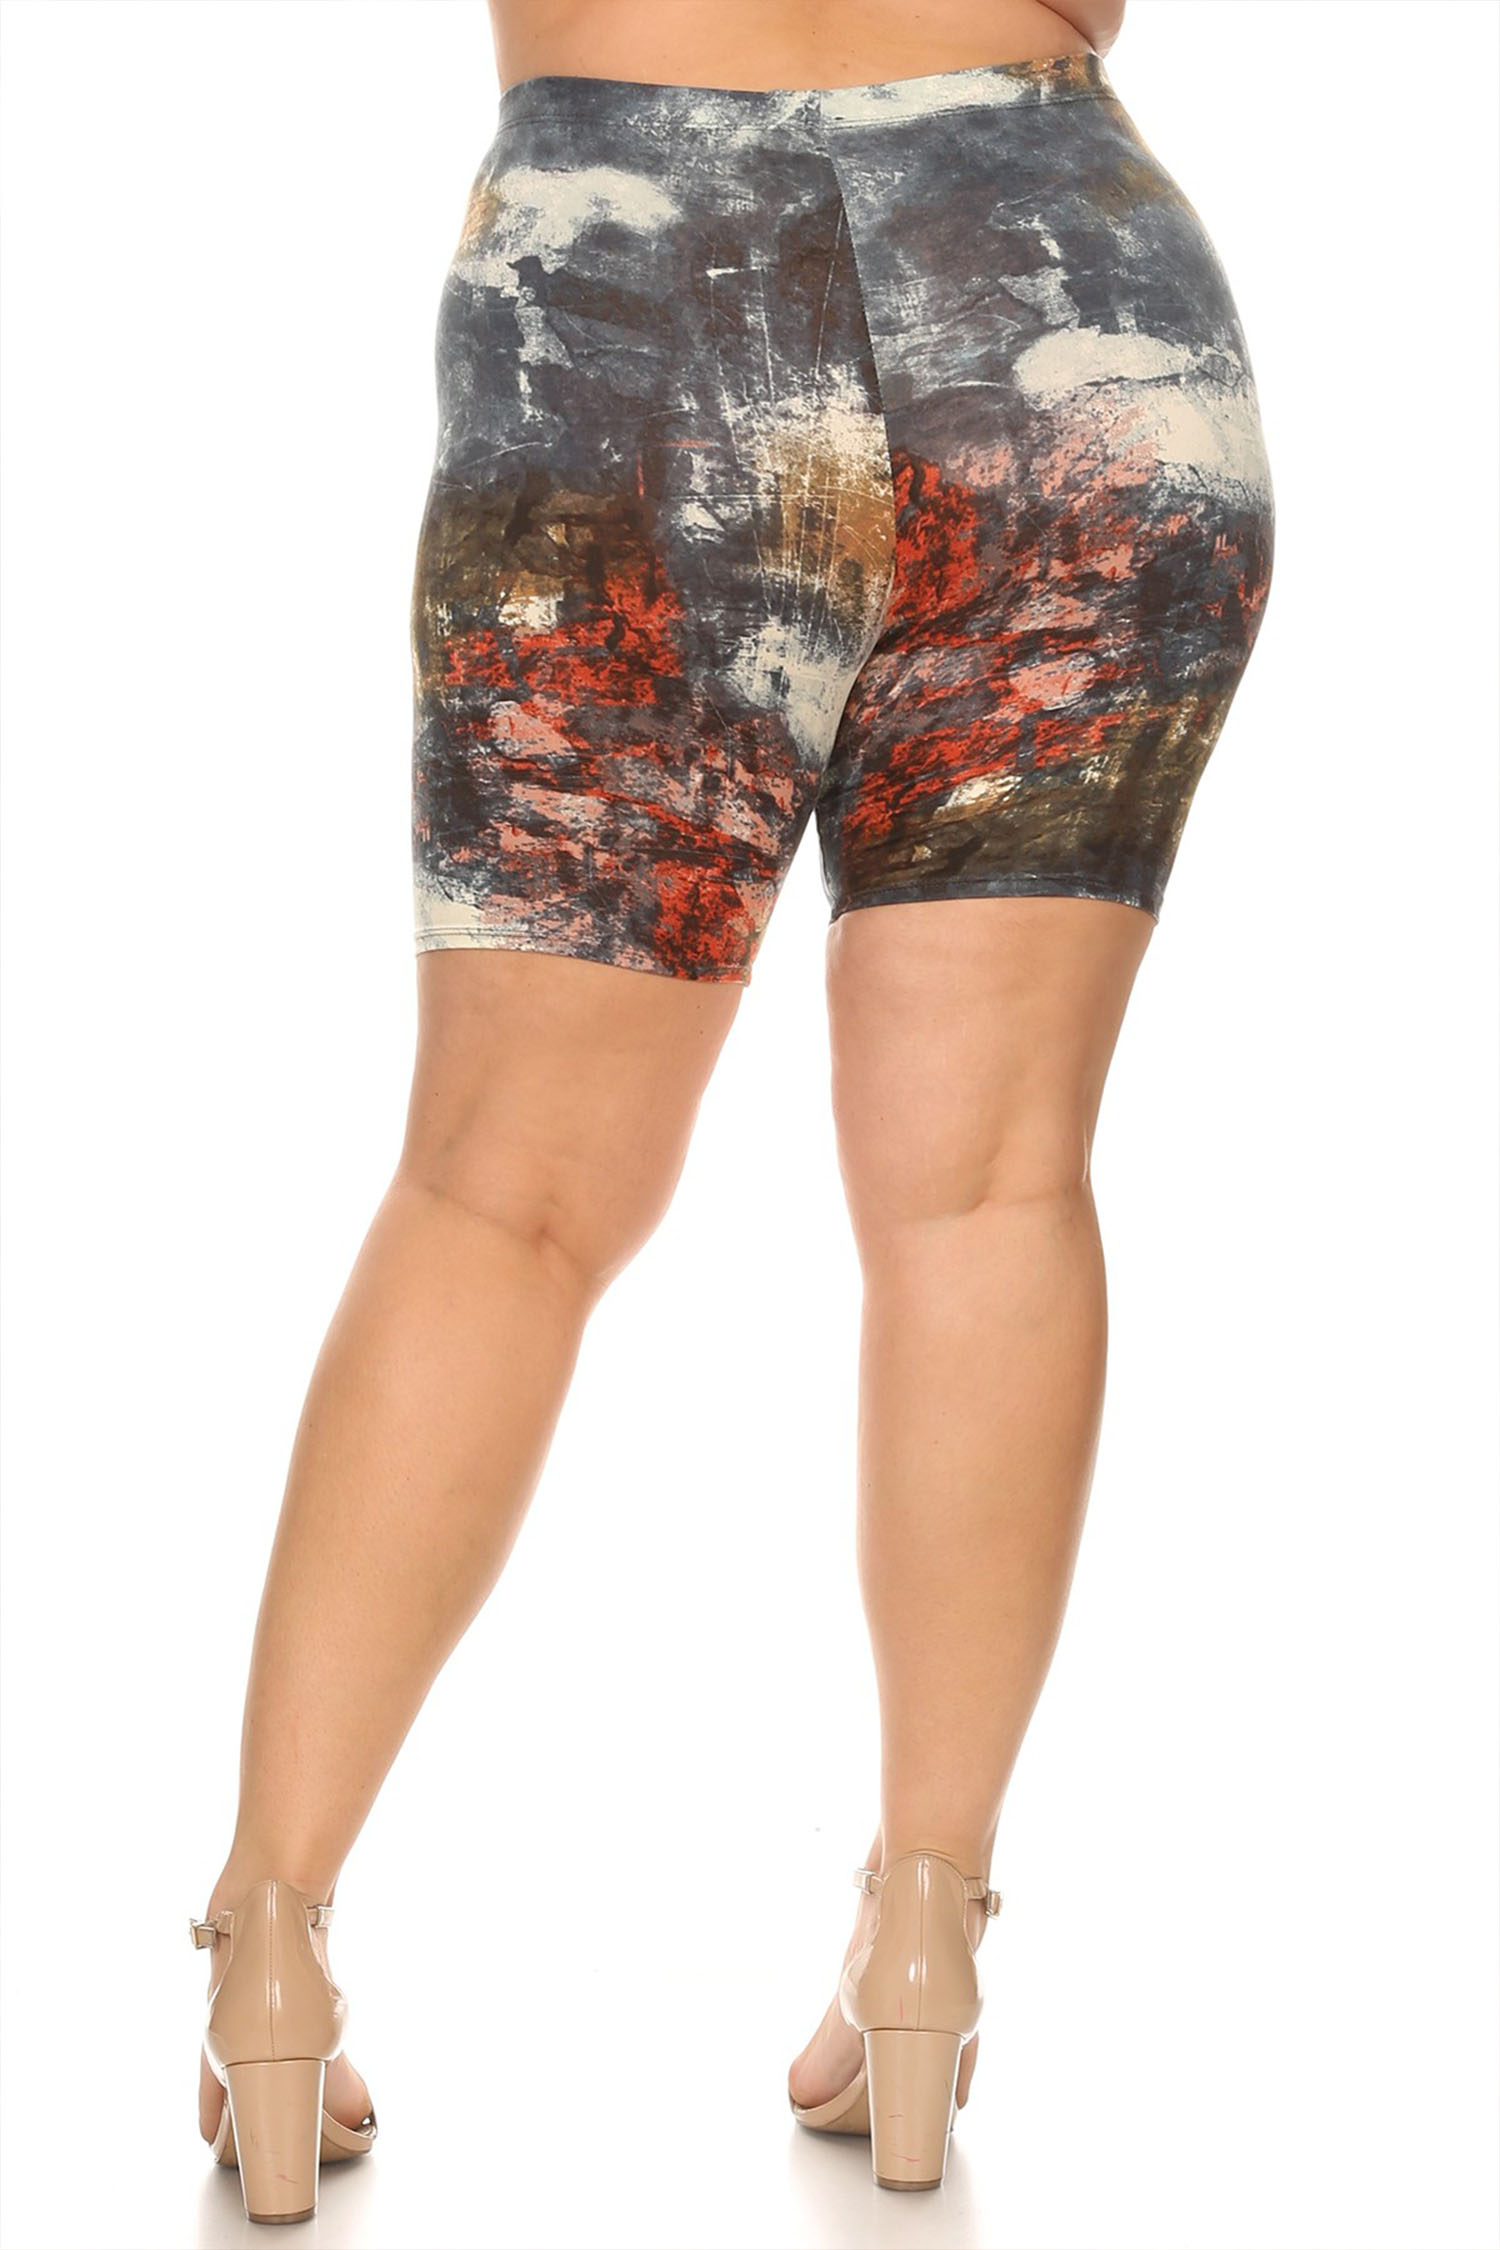 Women's Plus Size Workout High Waist Stretch Active Yoga Print Basic Biker Shorts Pants - image 3 of 4